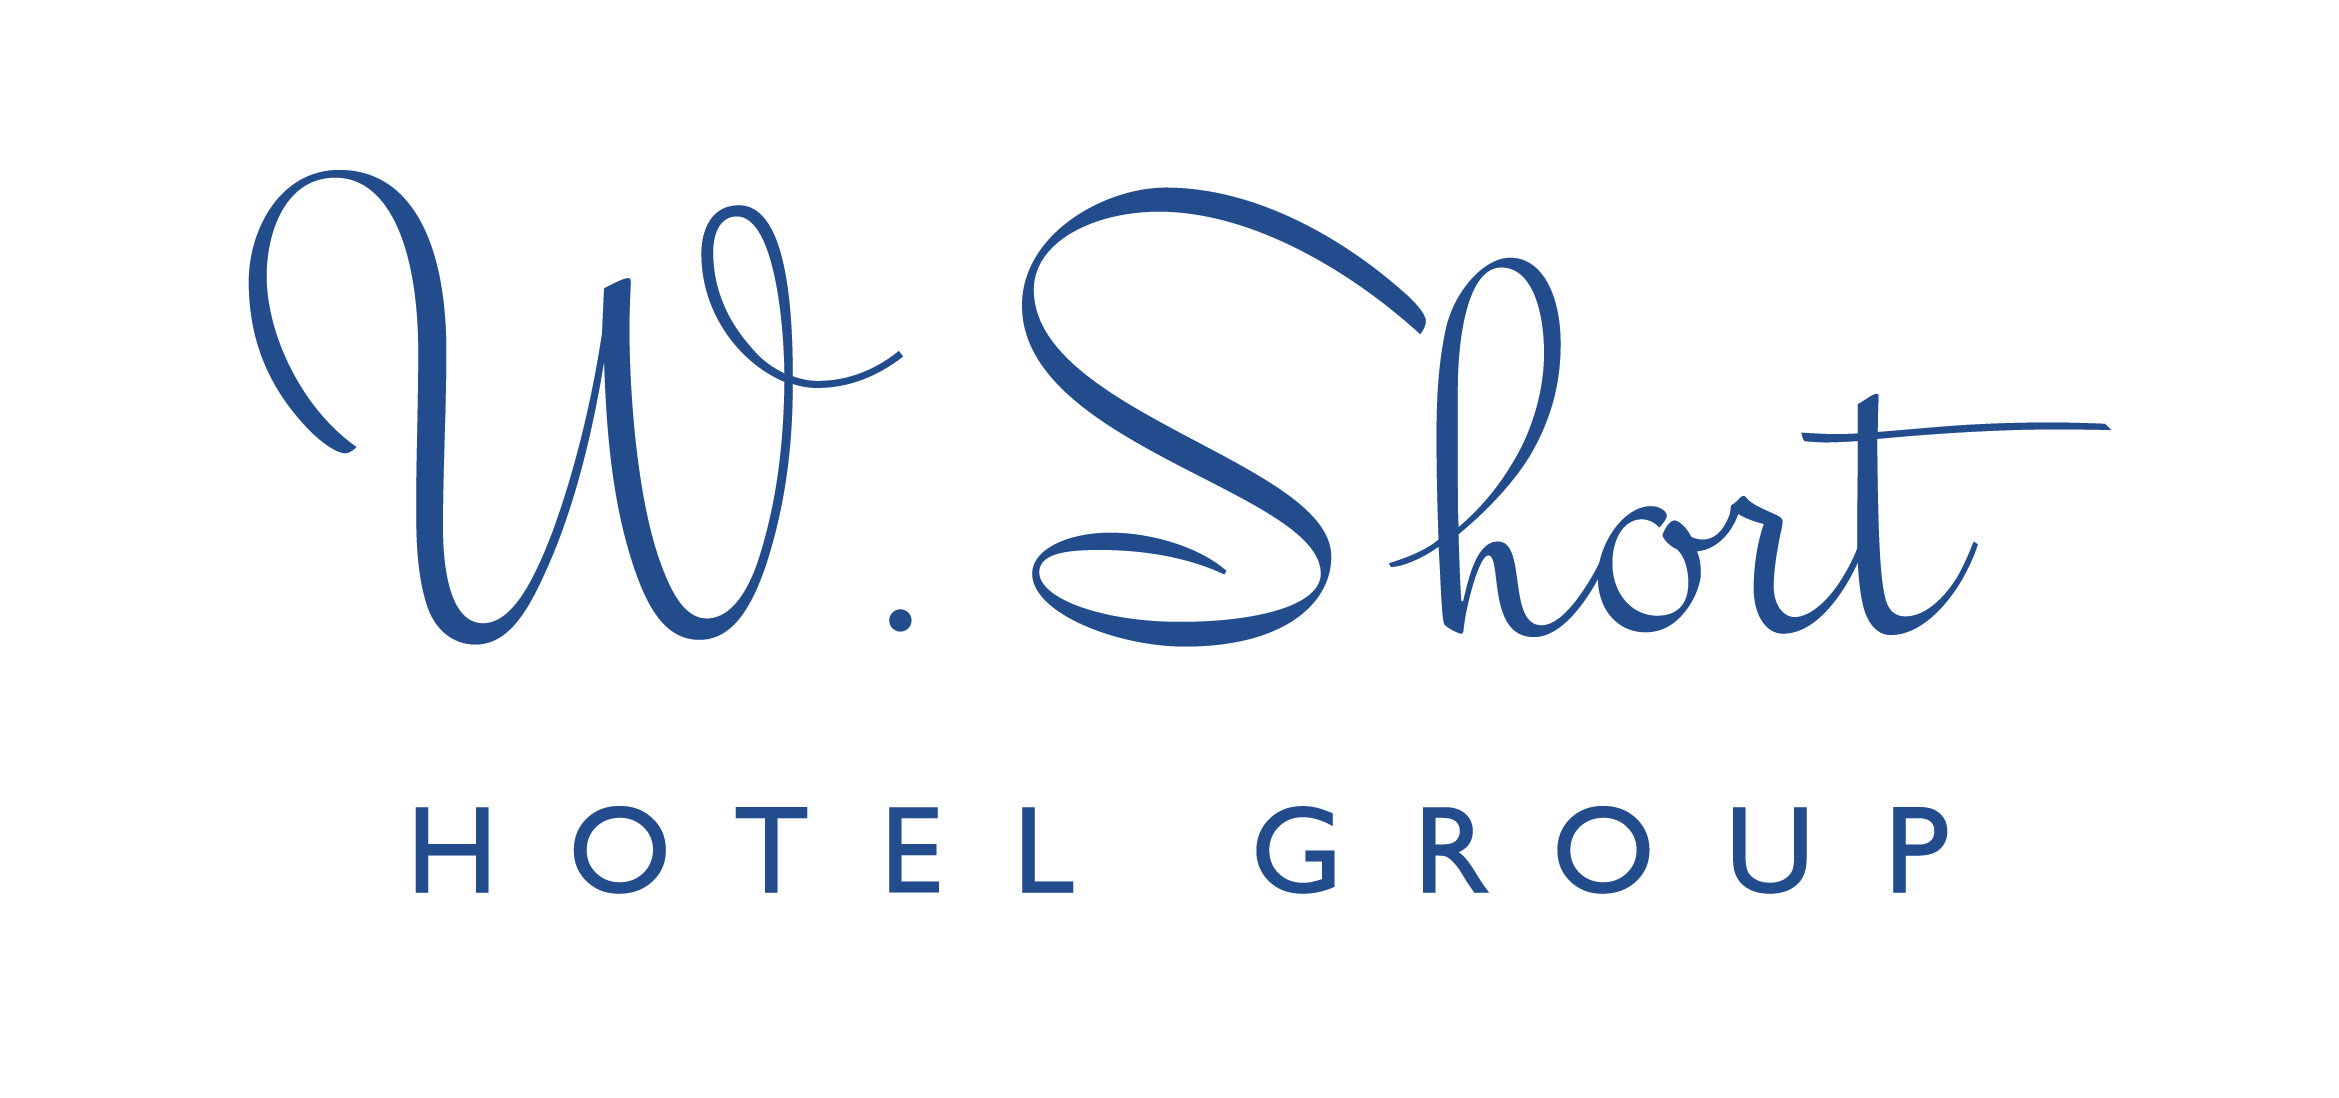 W. Short Hotel Group